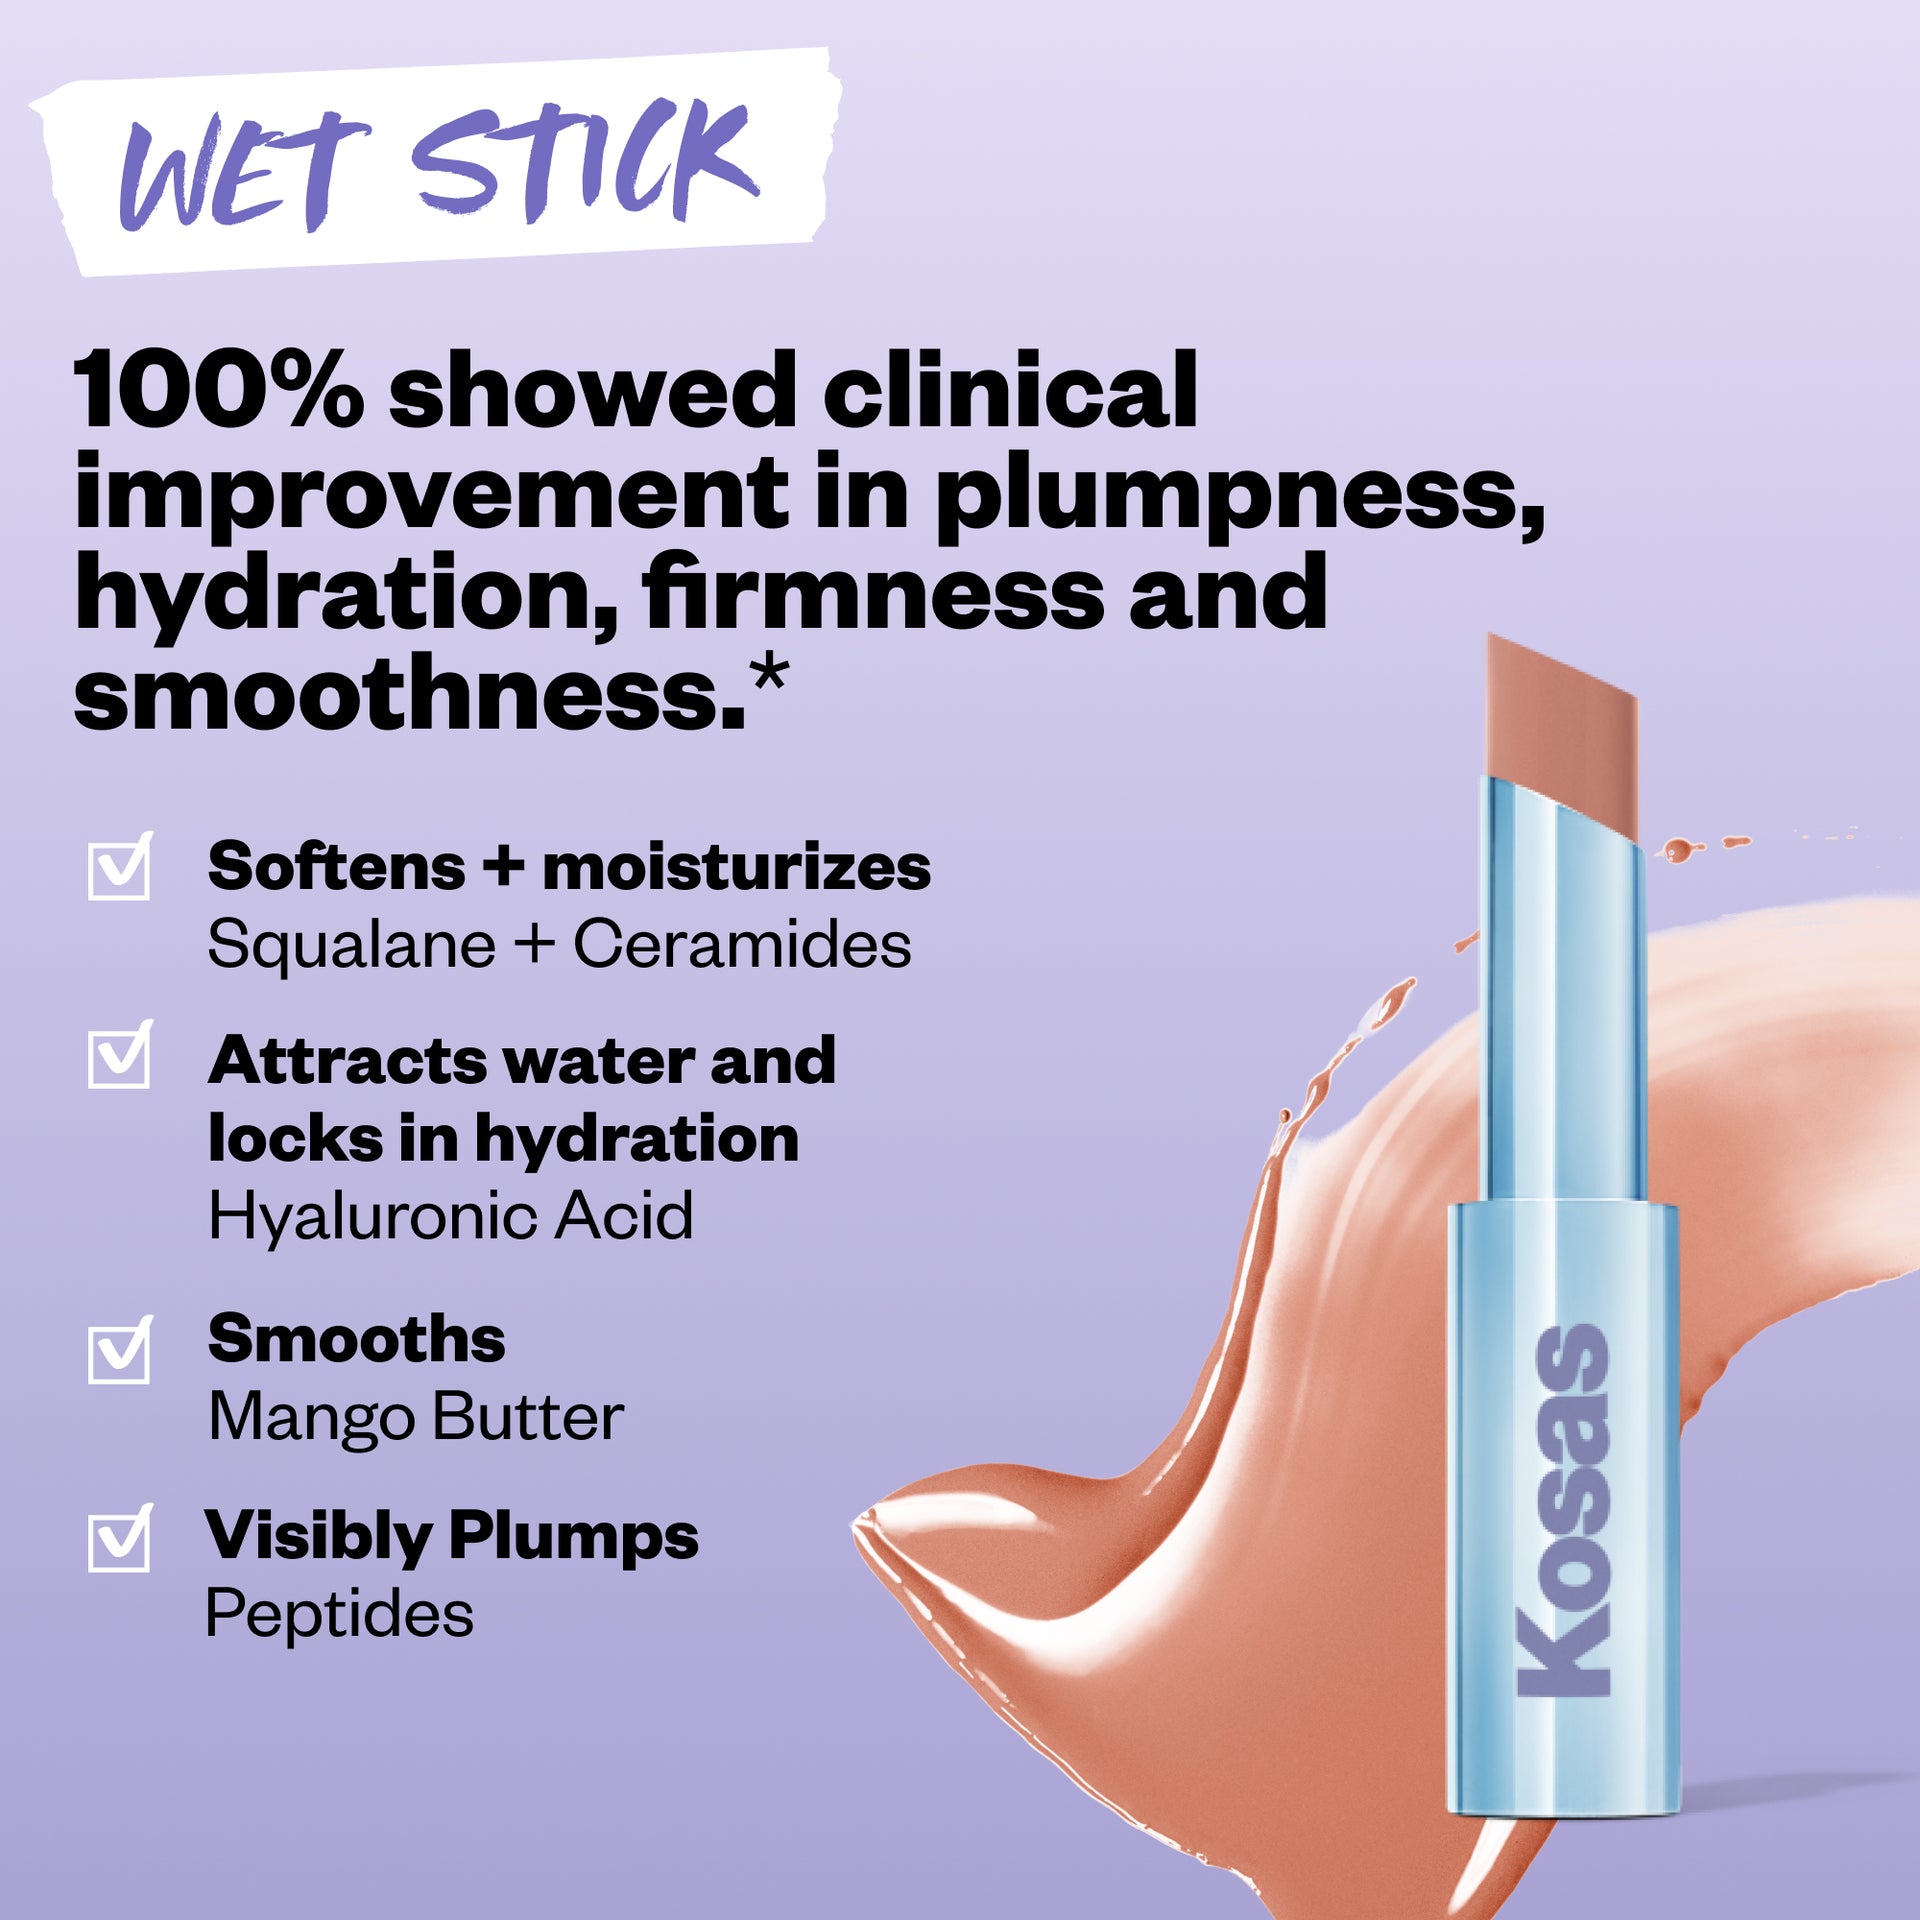 Wet Stick ingredients and benefits